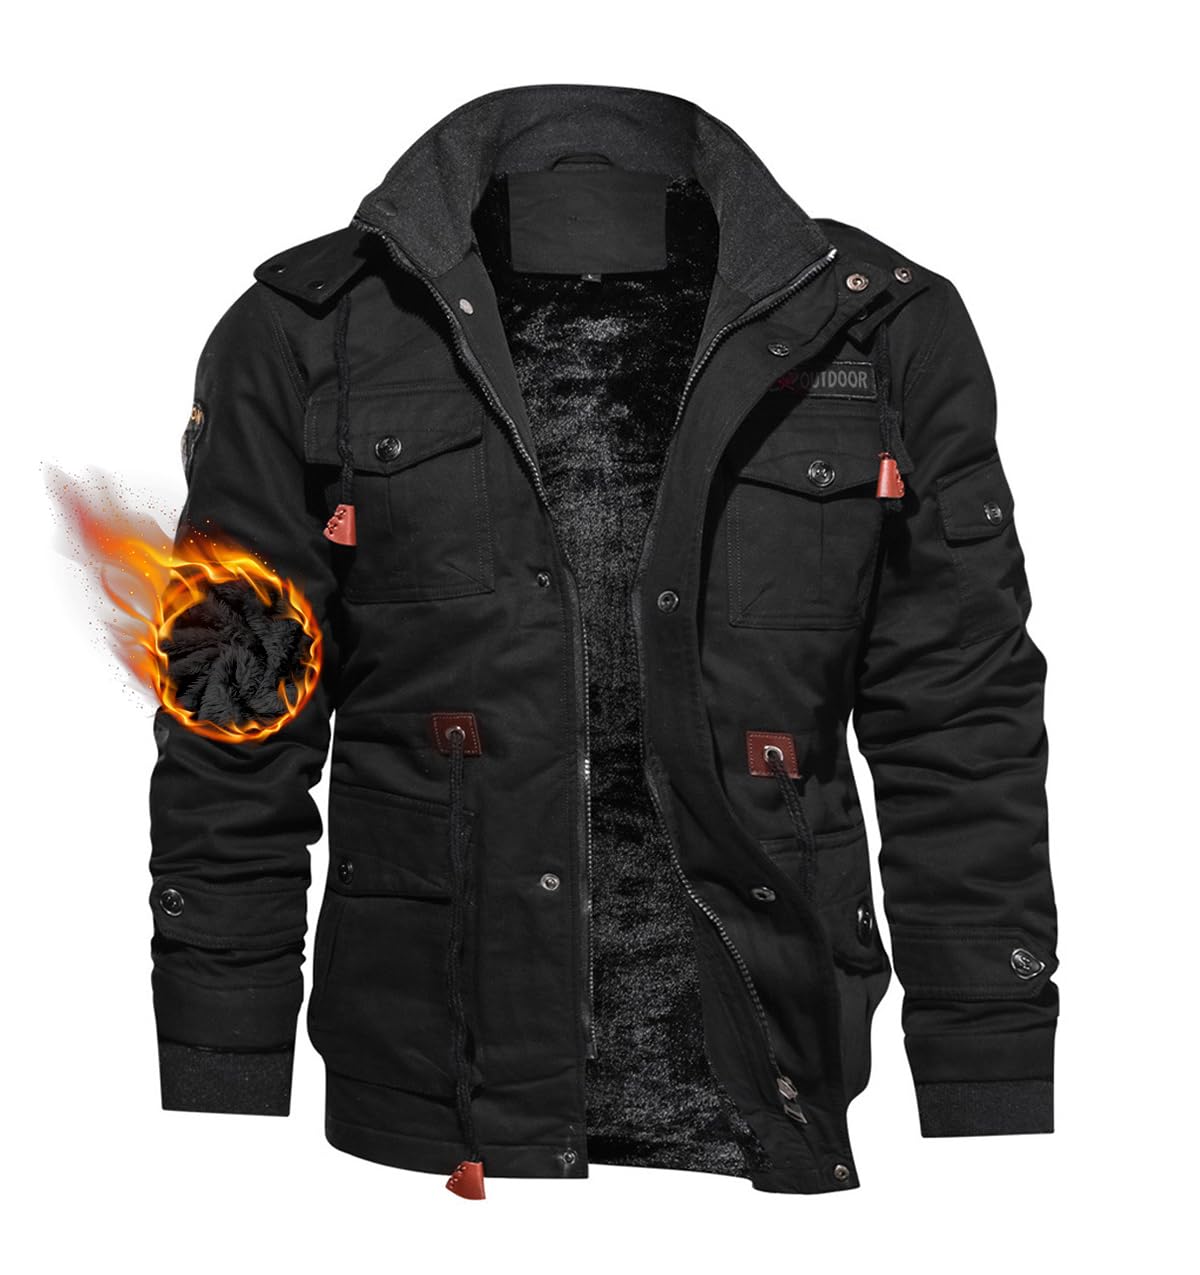 TACVASEN Jackets Men Winter Army Military Jacket Outdoor Cotton Coat Black, US 2XL